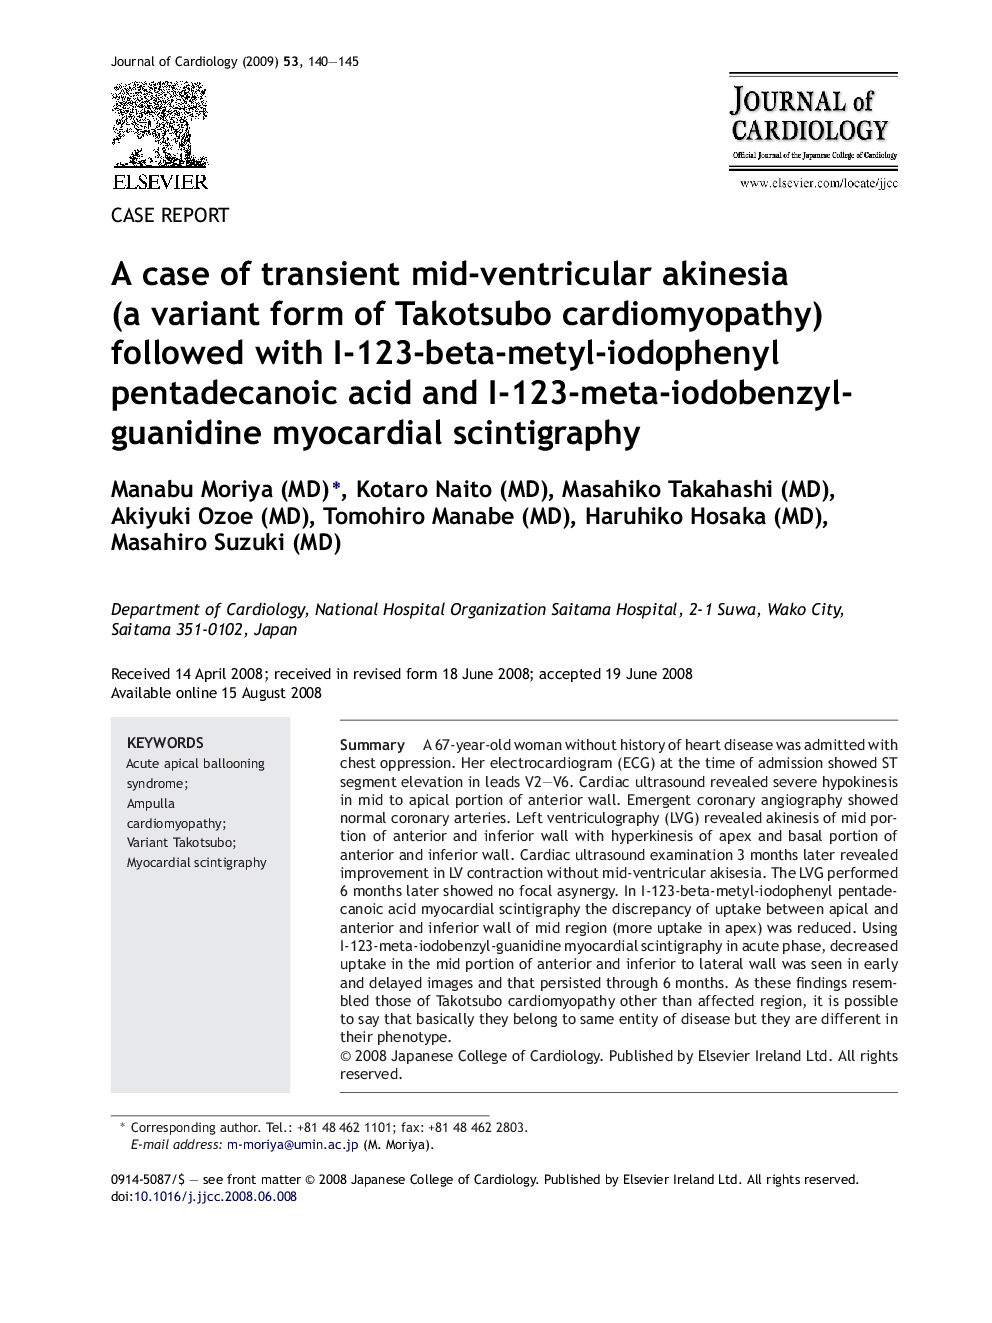 A case of transient mid-ventricular akinesia (a variant form of Takotsubo cardiomyopathy) followed with I-123-beta-metyl-iodophenyl pentadecanoic acid and I-123-meta-iodobenzyl-guanidine myocardial scintigraphy